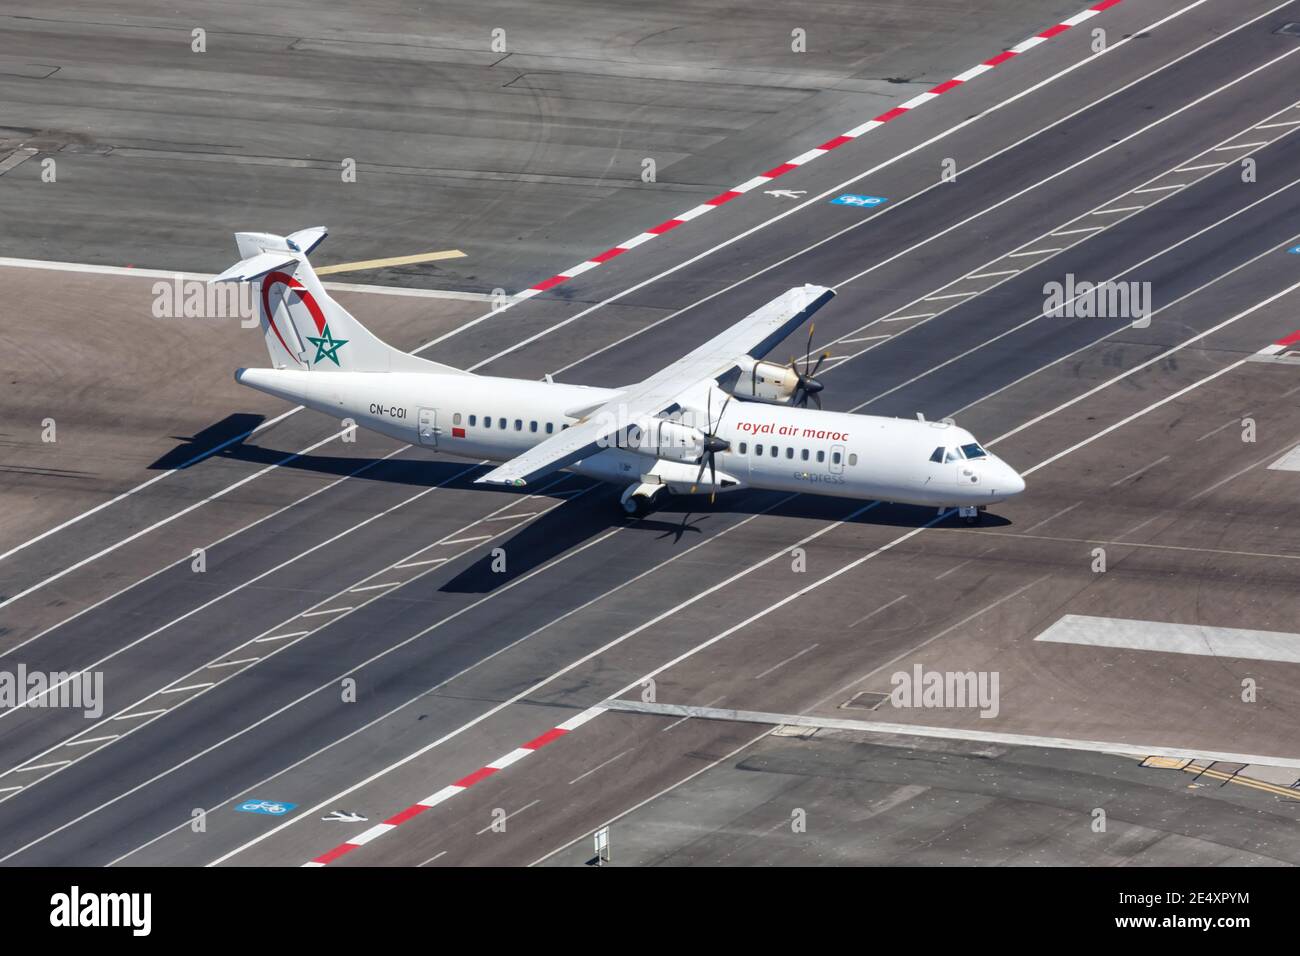 Gibraltar - July 29, 2018: Royal Air Maroc Express ATR 72 airplane at Gibraltar Airport (GIB). Stock Photo